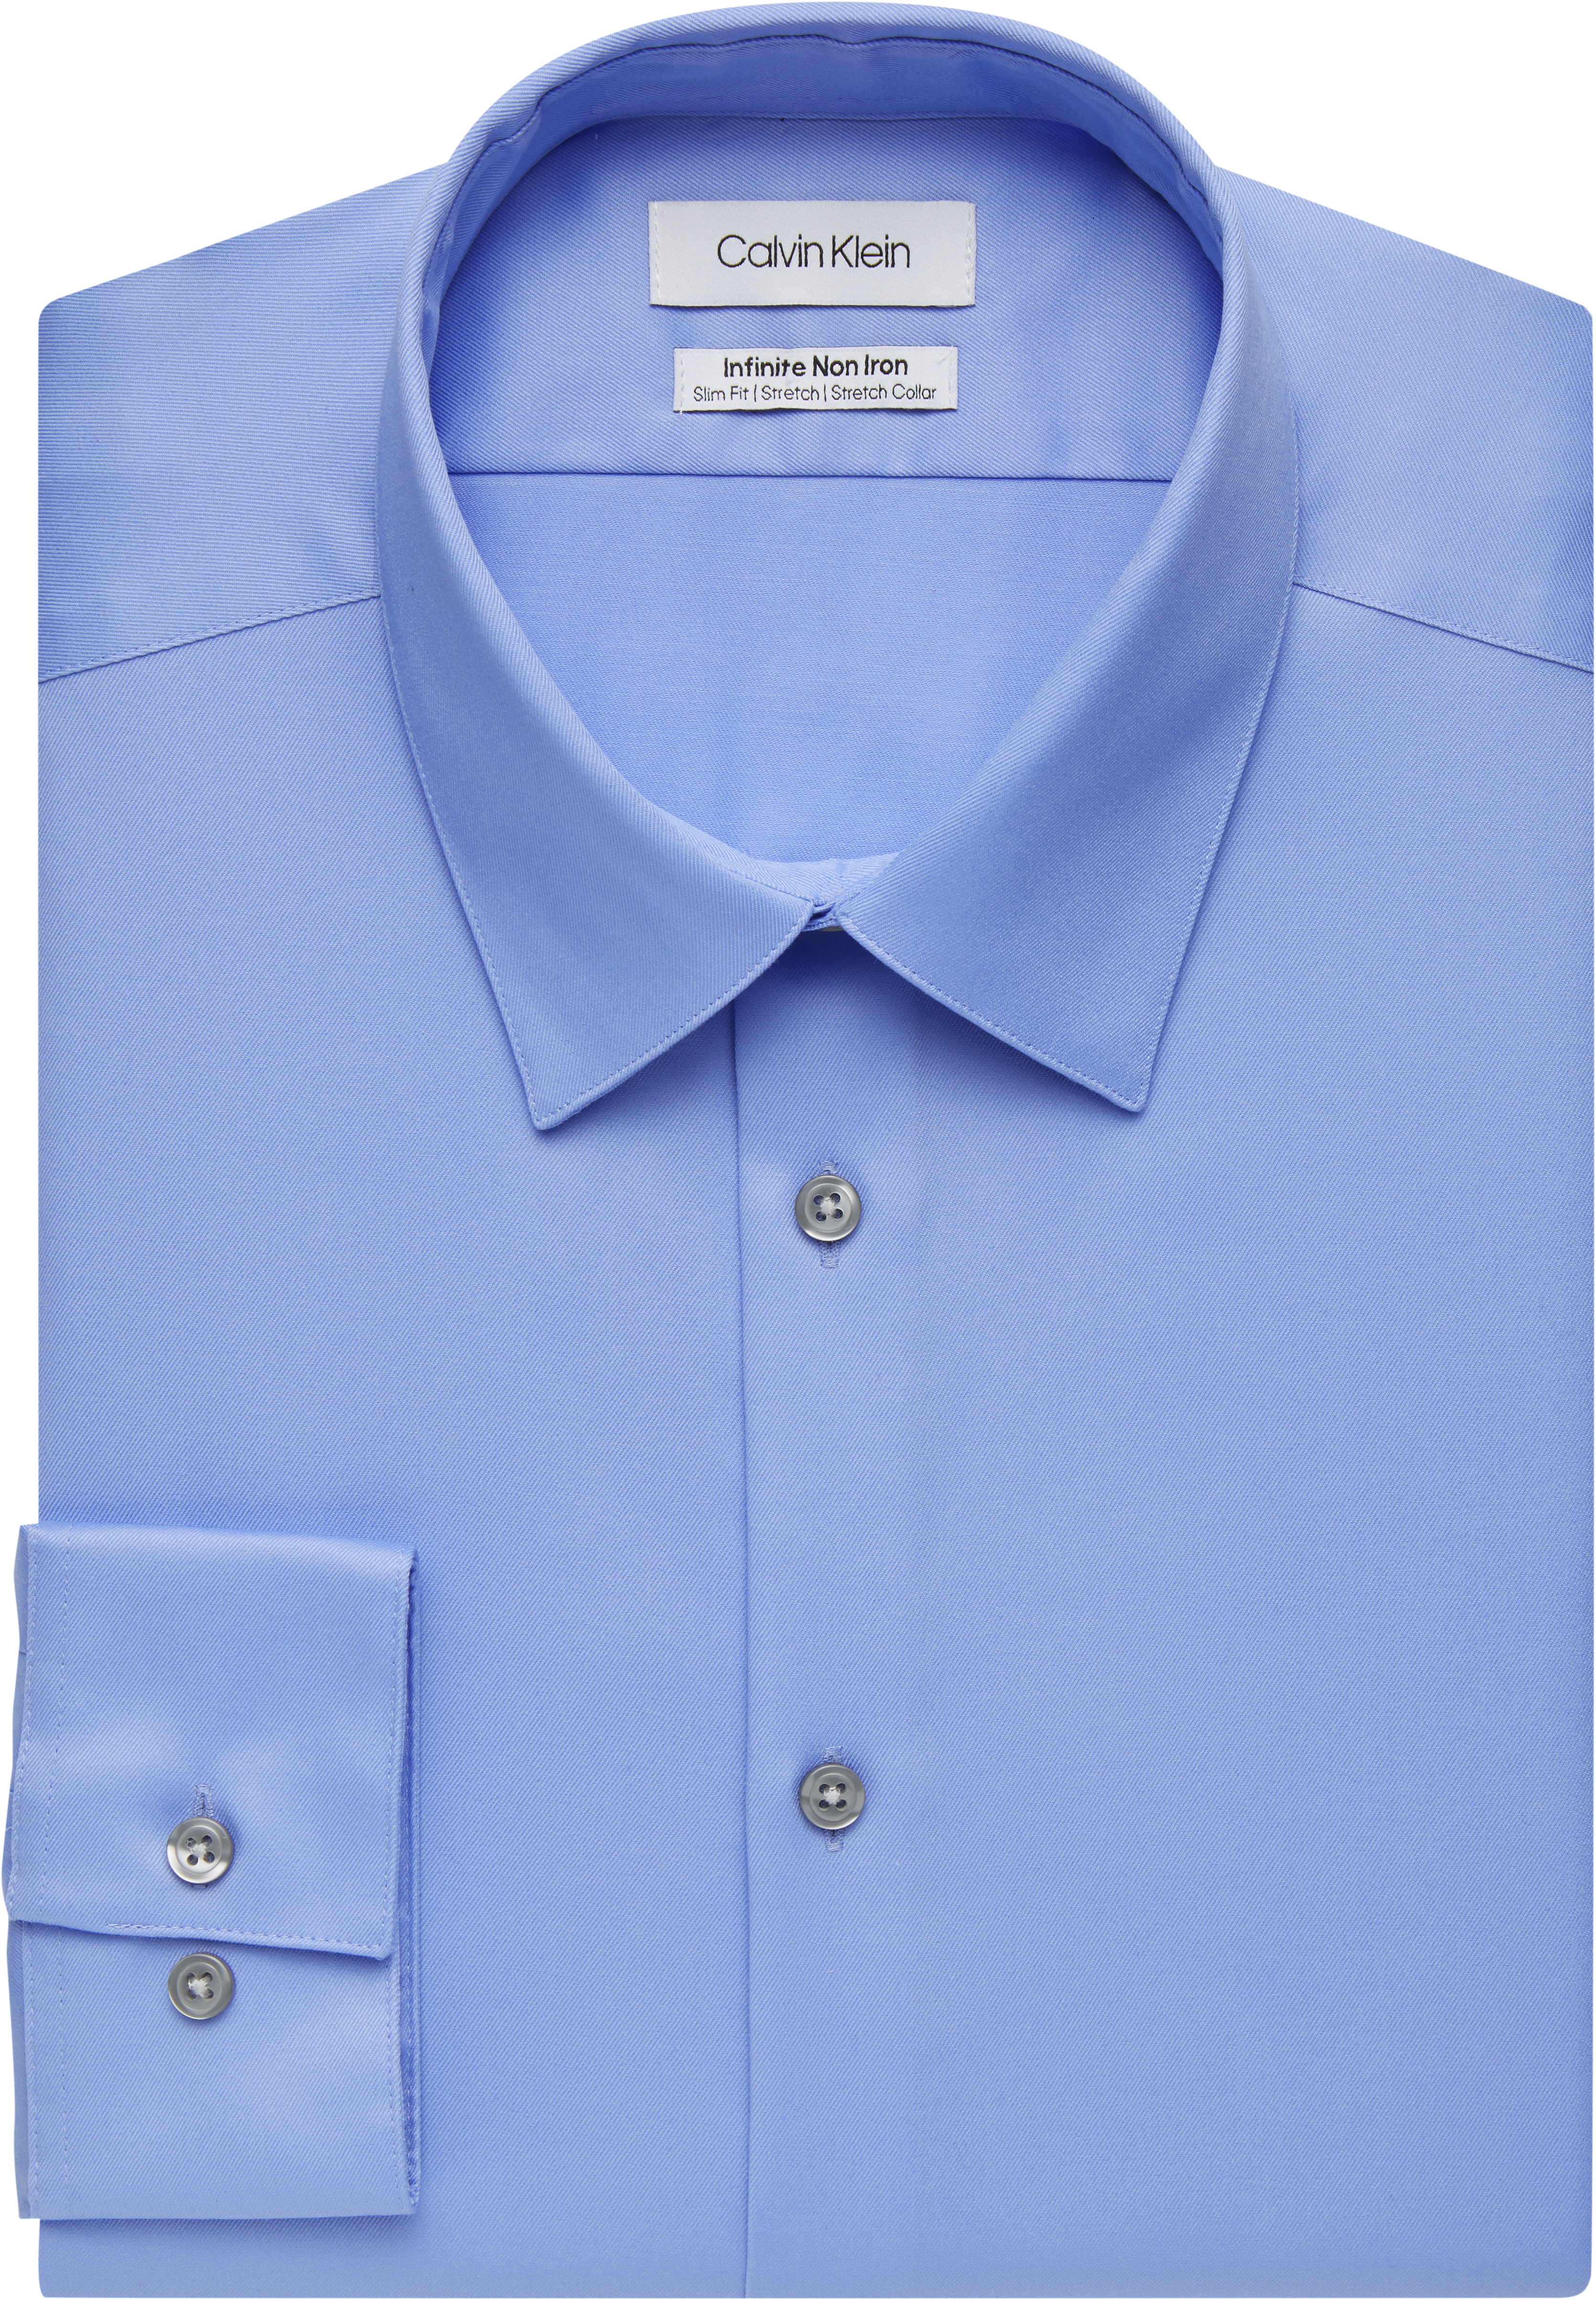 Calvin Klein Infinite Non-Iron Slim Fit Dress Shirt, Light Blue - Men's  Featured | Men's Wearhouse